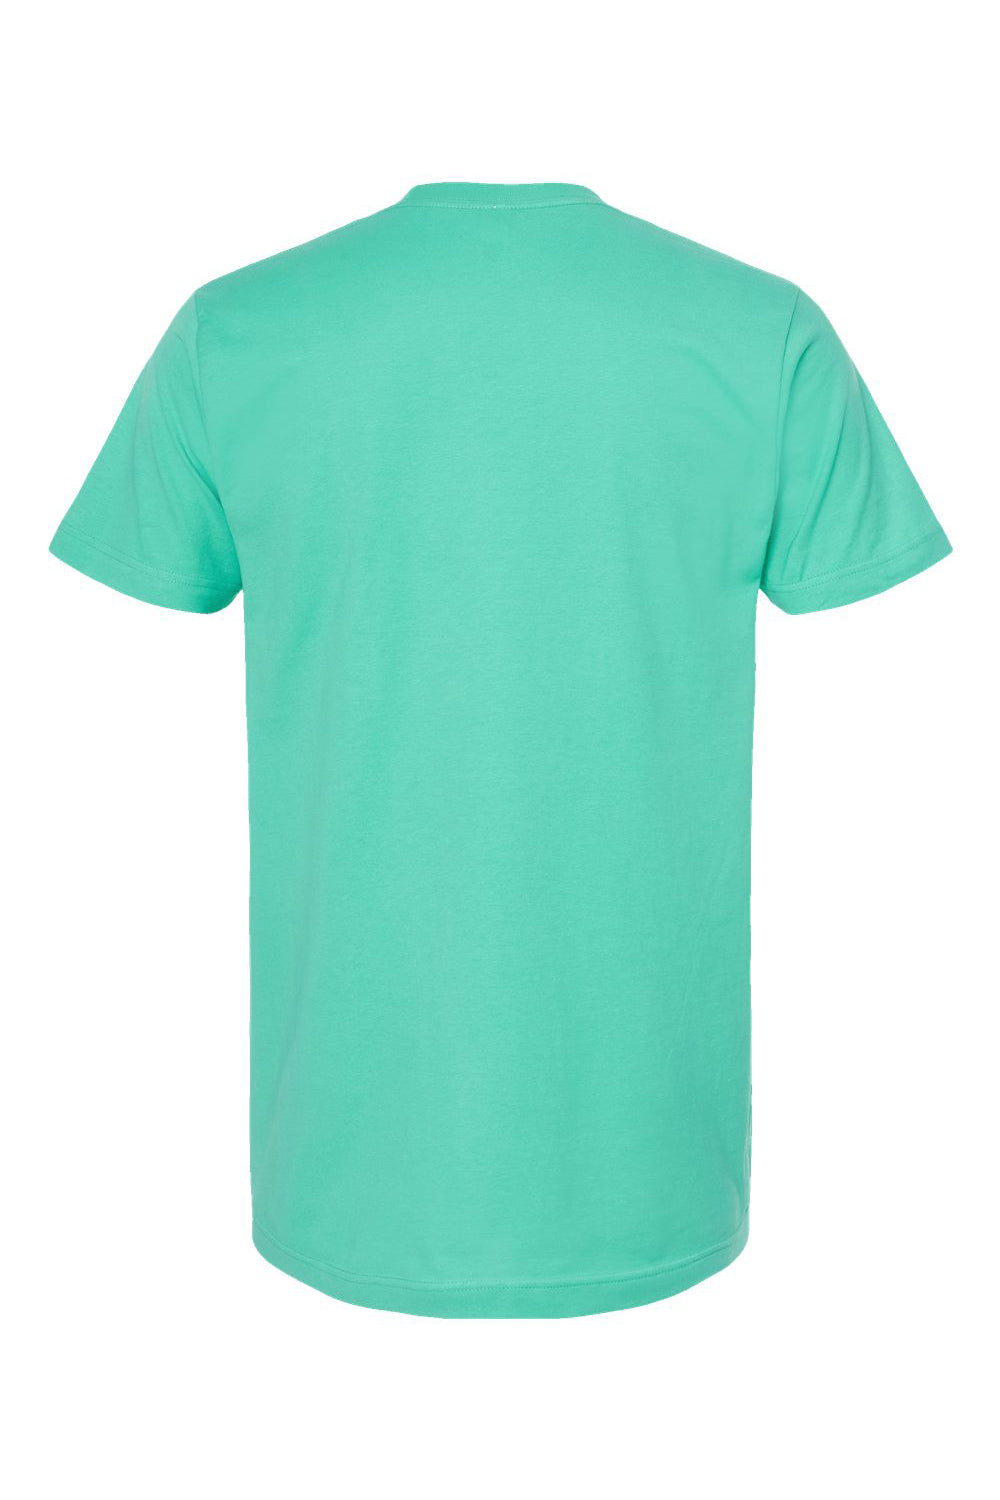 Tultex 202 Mens Fine Jersey Short Sleeve Crewneck T-Shirt Mint Green Flat Back